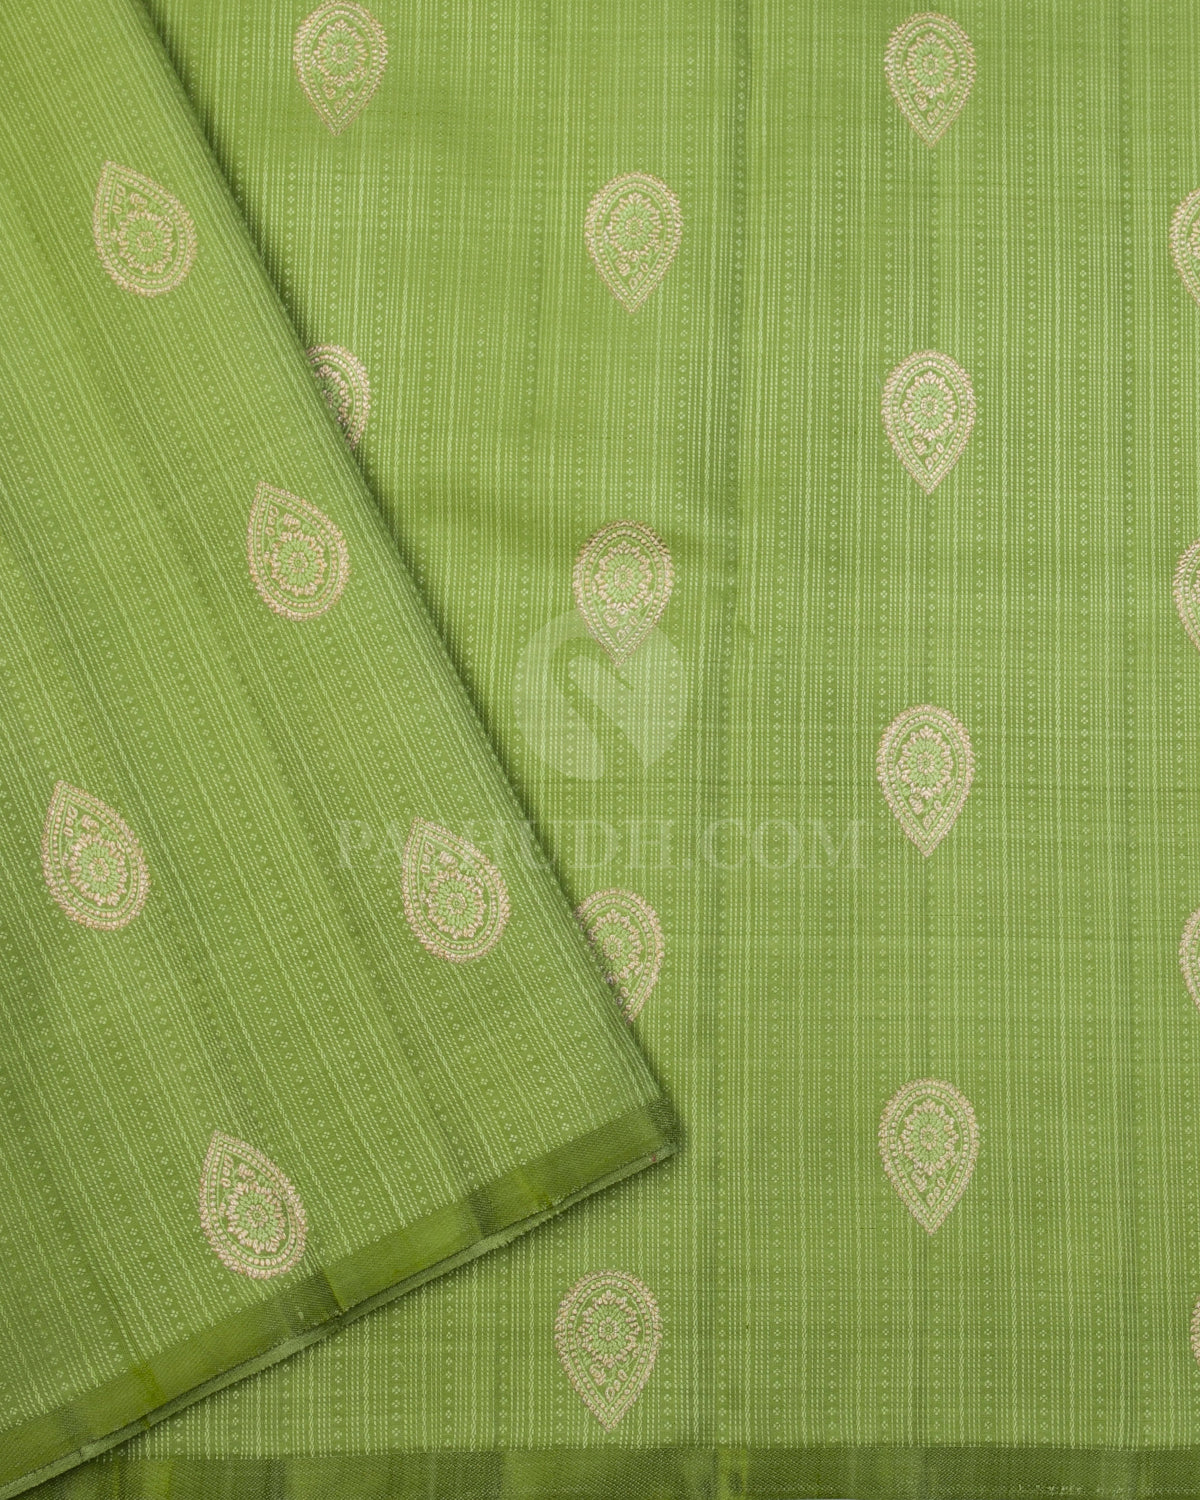 Forest Green Kanjivaam Silk Saree - S1018(A)